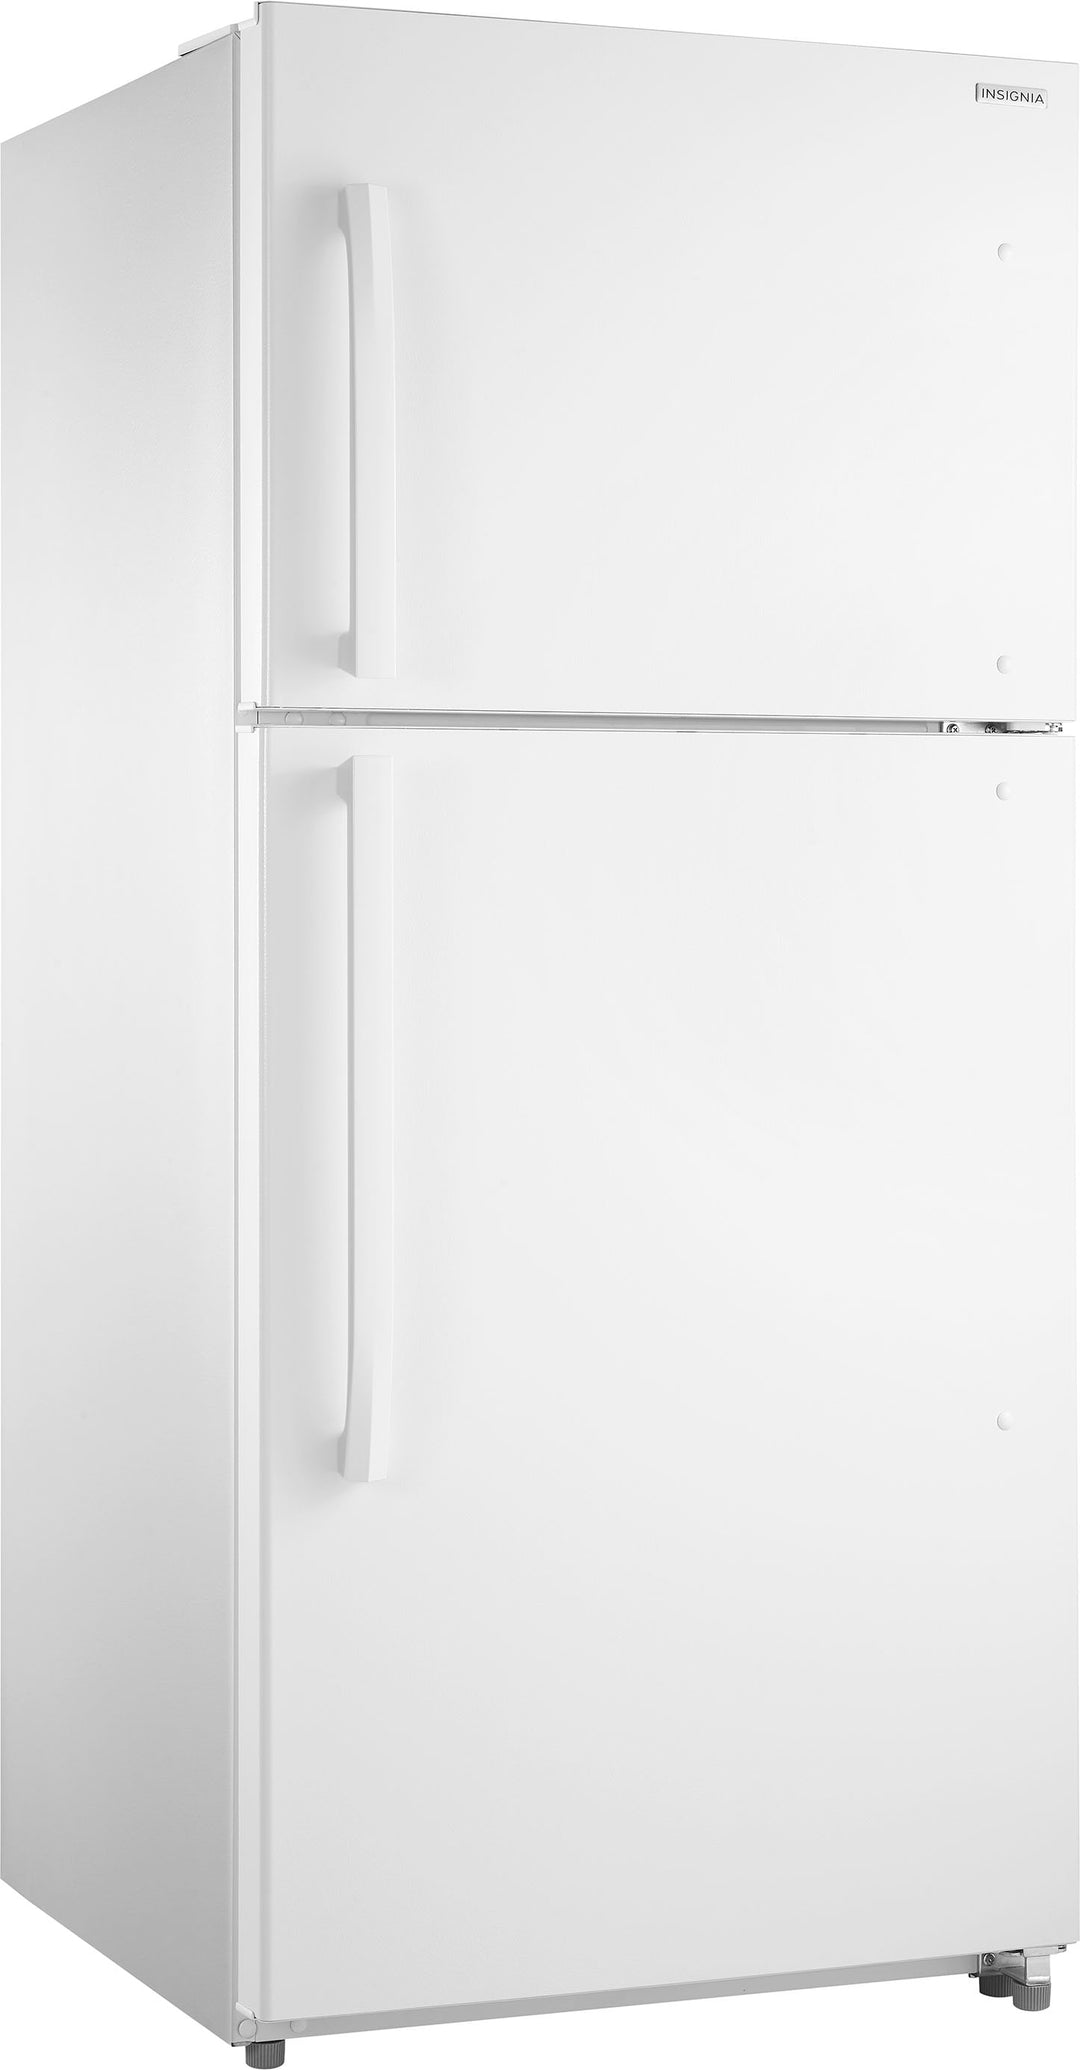 Insignia™ - 18 Cu. Ft. Top-Freezer Refrigerator - White_1